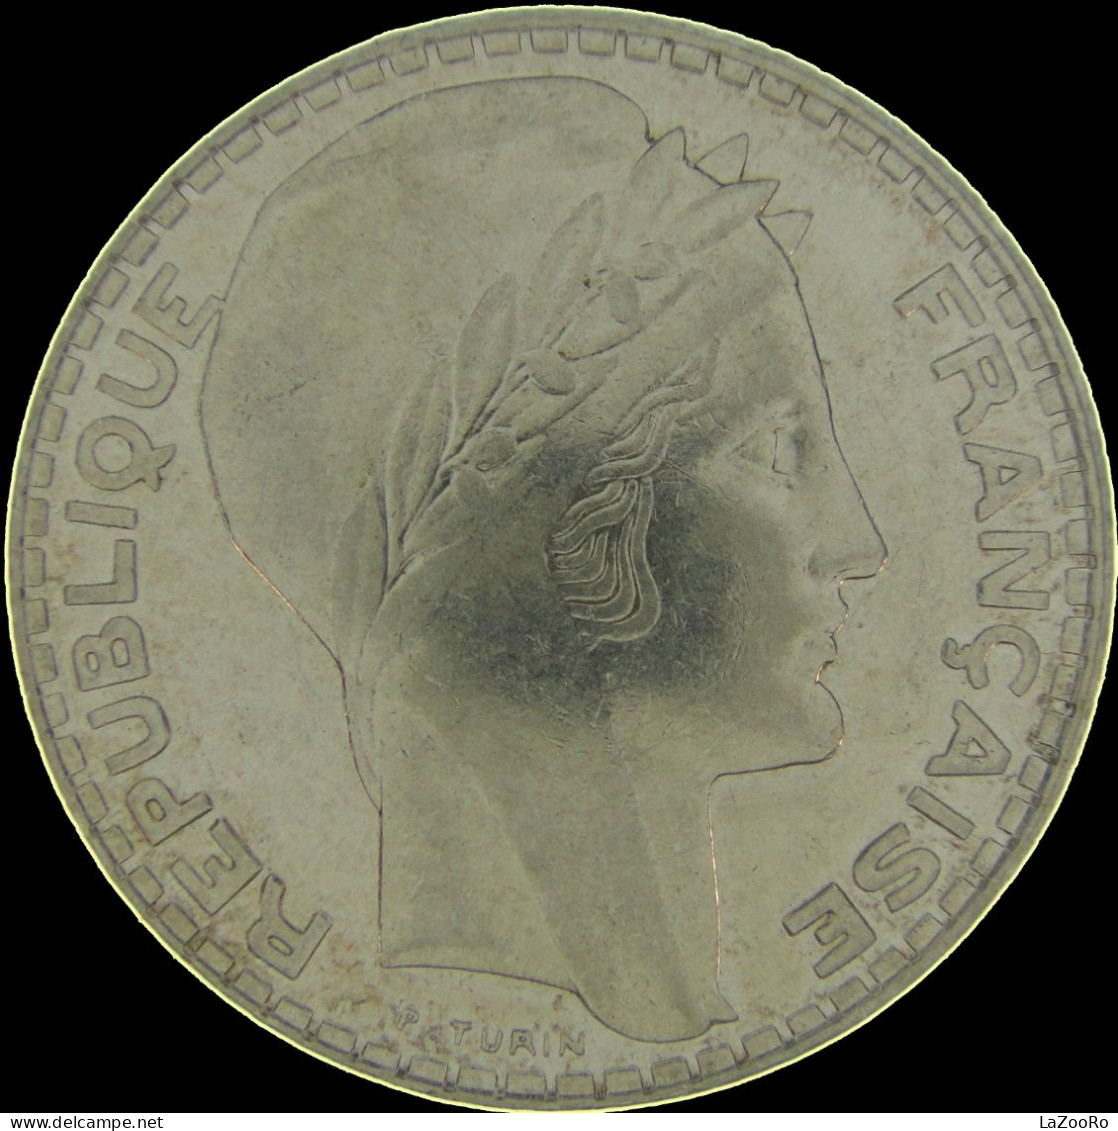 LaZooRo: France 10 Francs 1939 UNC - Silver - 10 Francs